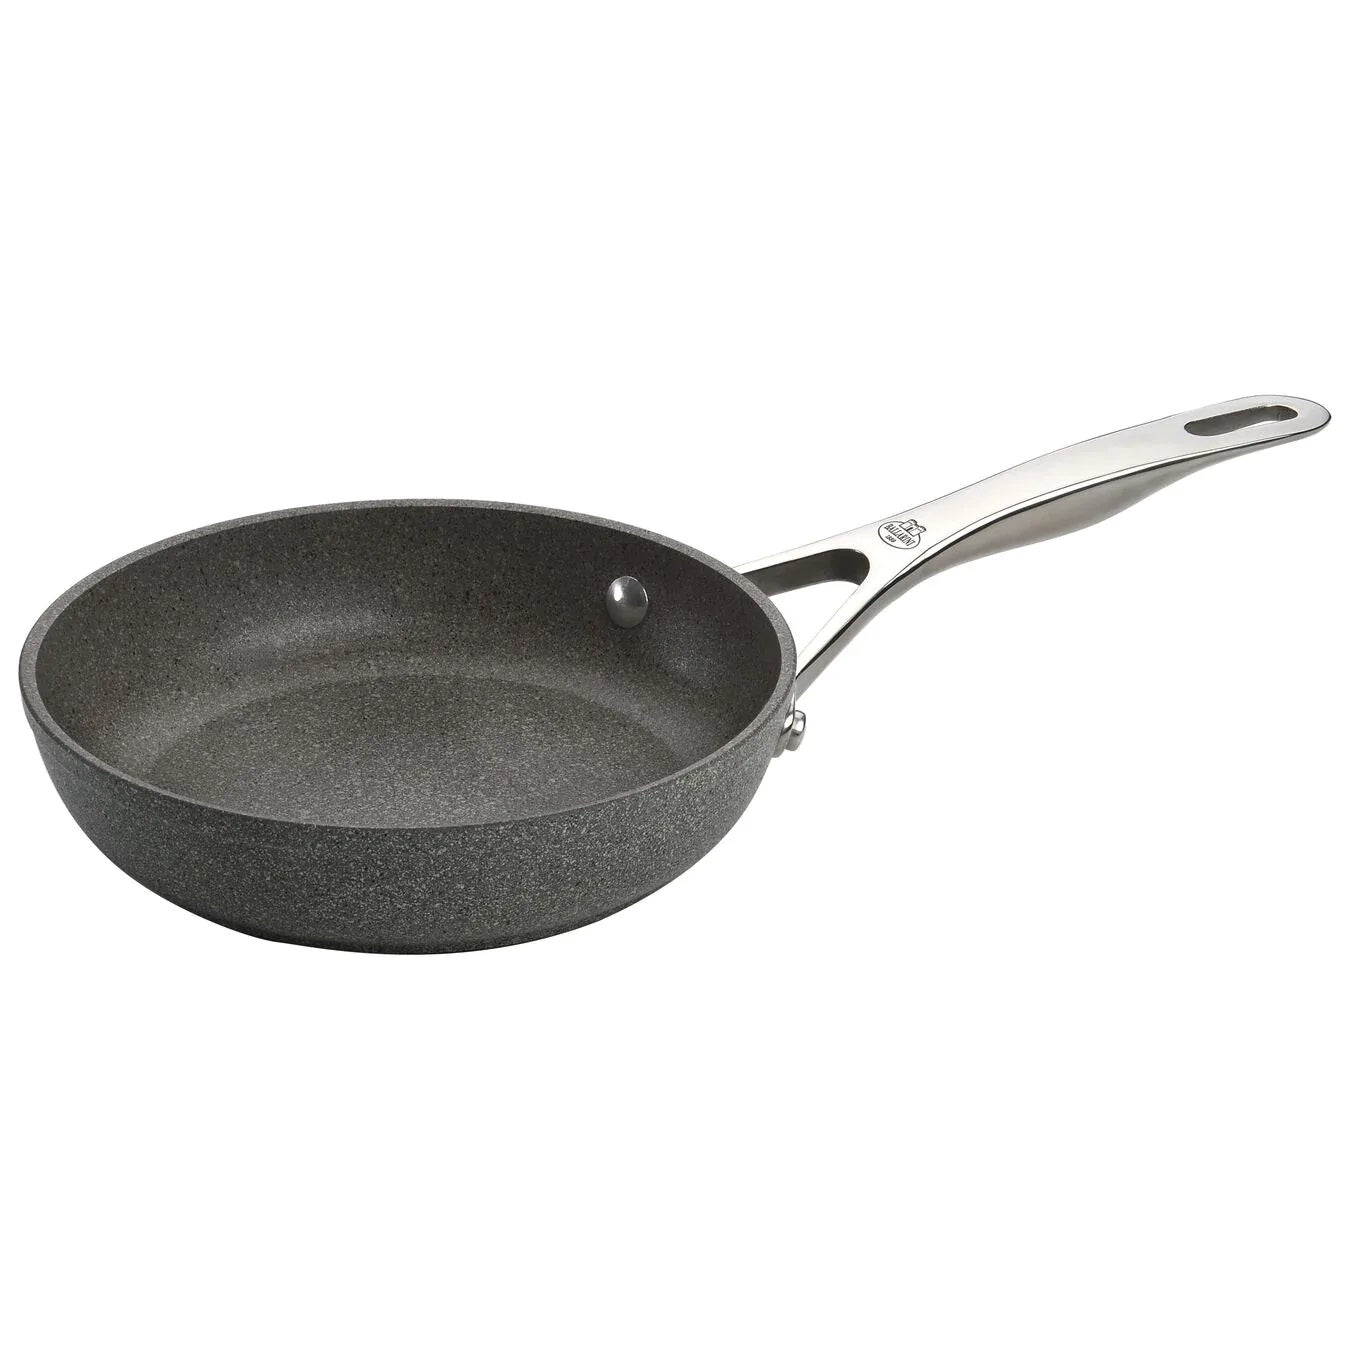 Ballarini Non-stick aluminum pan with handle, Salina line, 20 cm